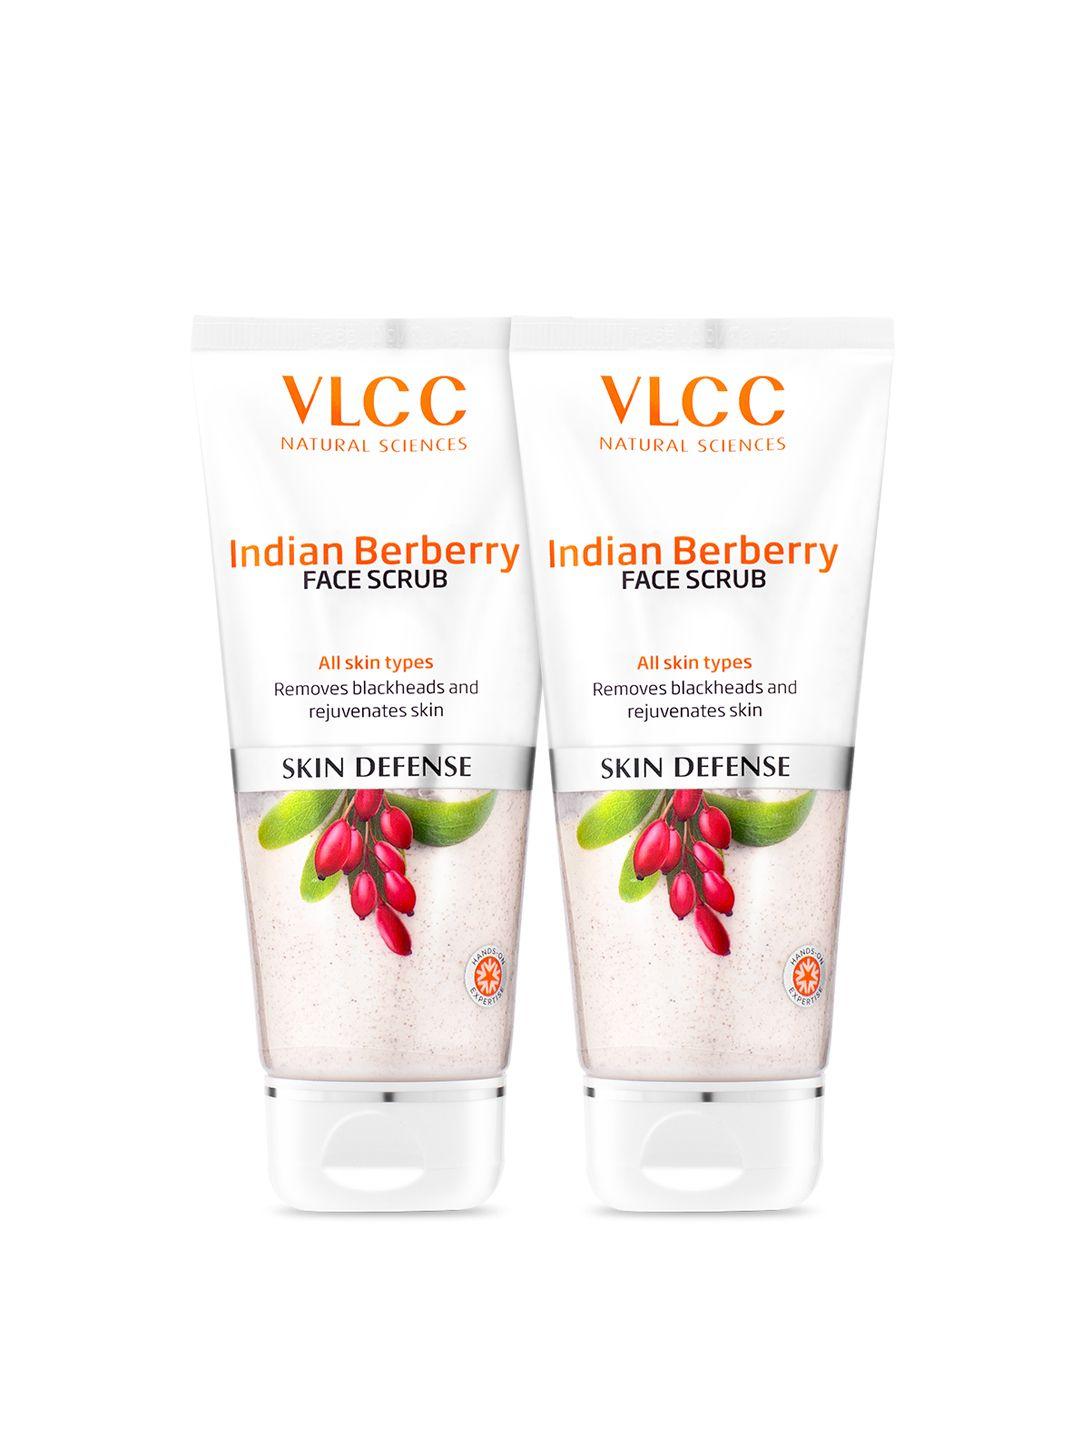 vlcc set of 2 skin defense indian berberry face scrub - 100 g each